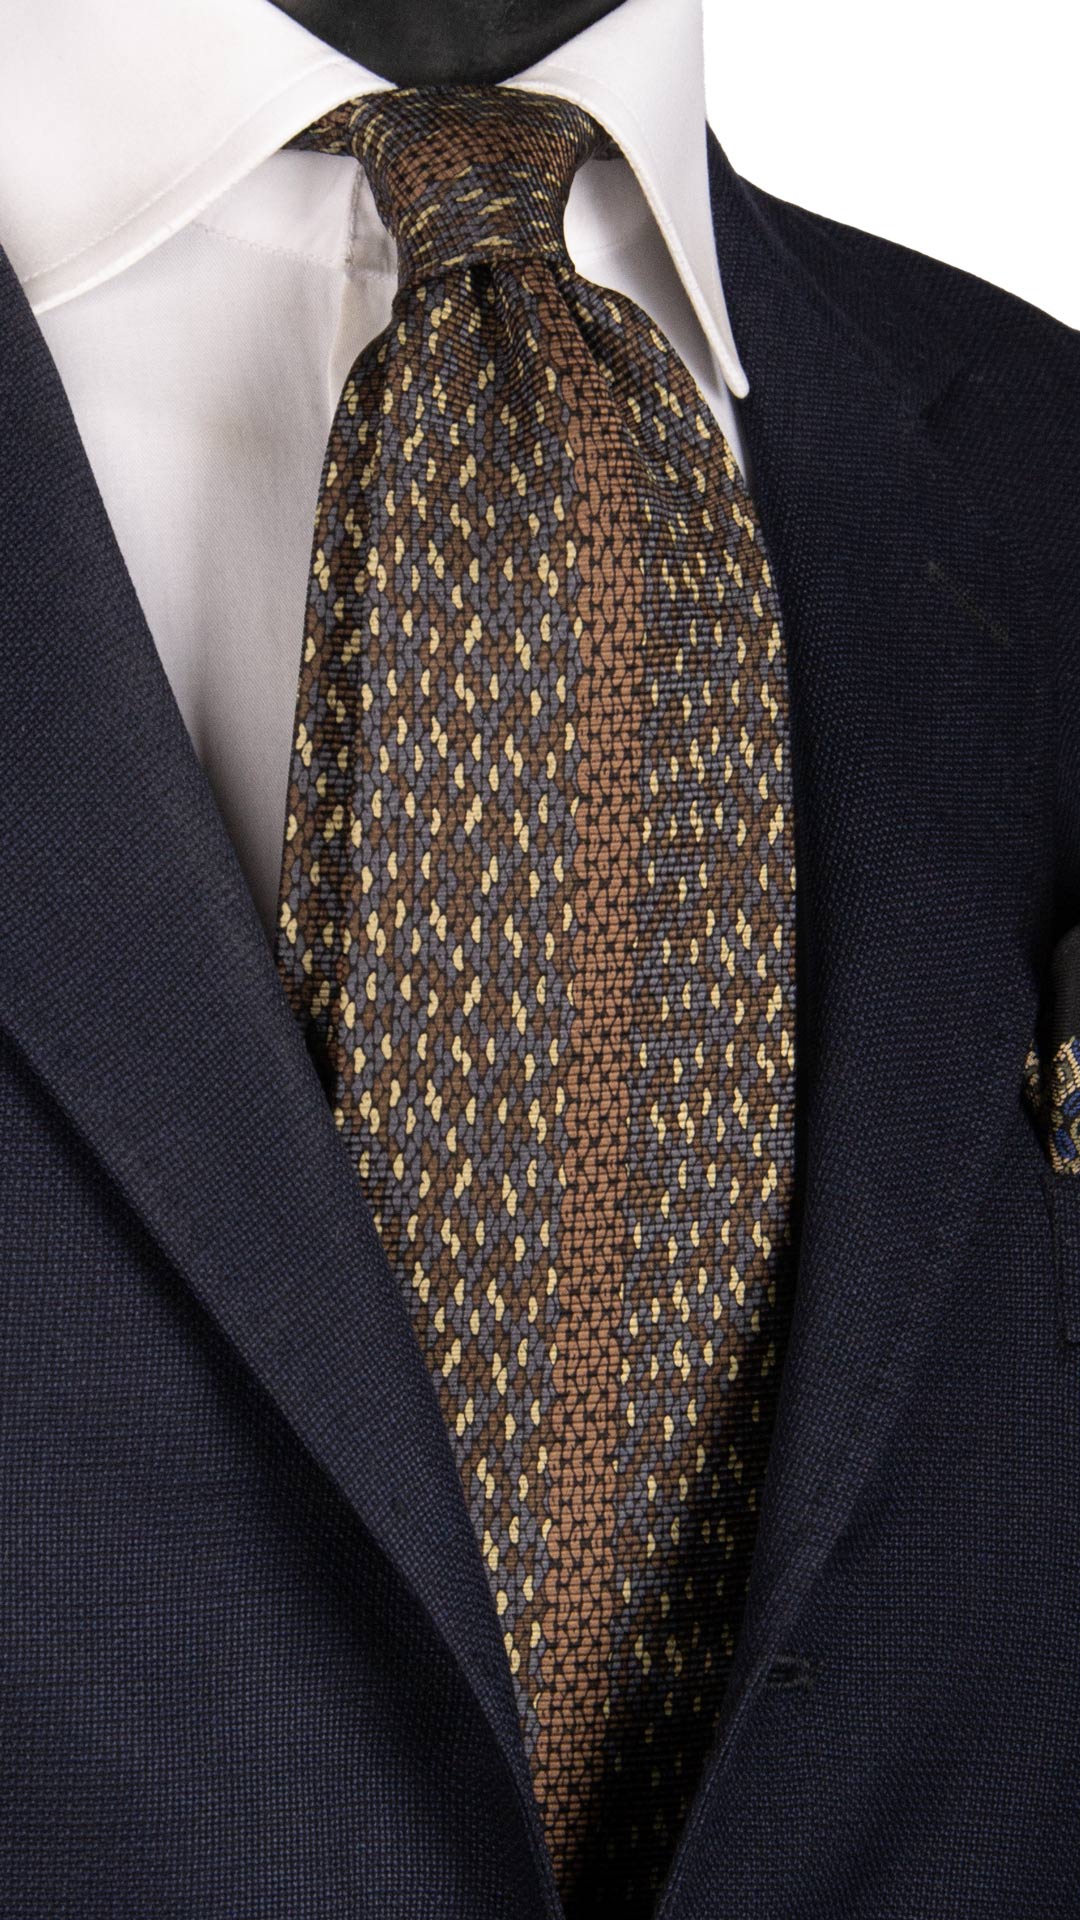 Cravatta Vintage di Seta Jacquard Fantasia Marrone Grigio Beige CV804 Made in Italy Graffeo Cravatte